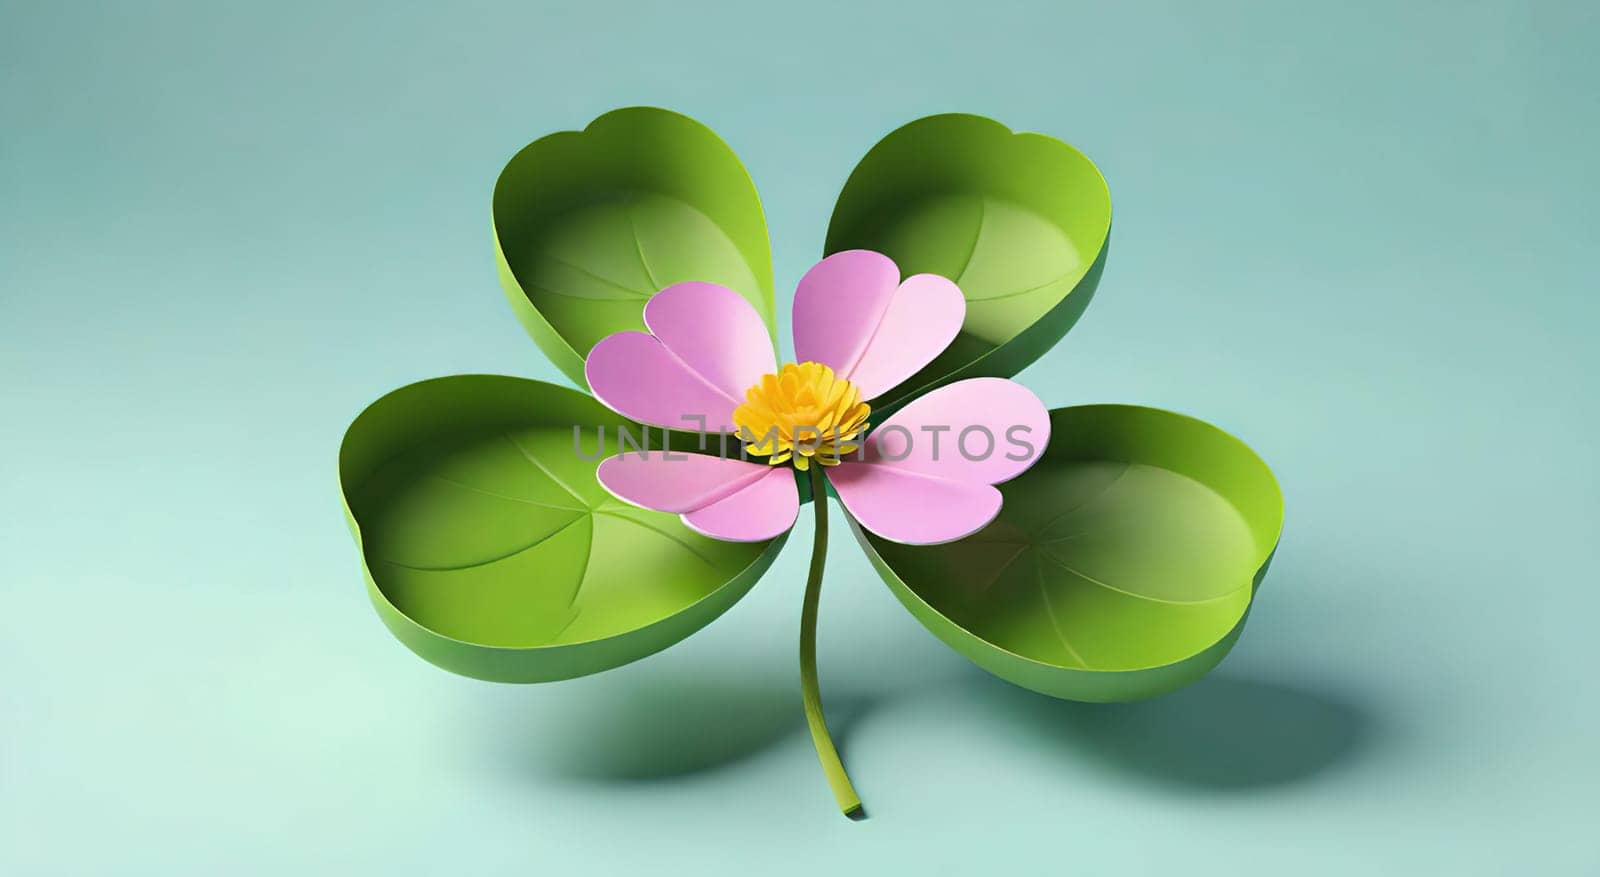 Clover with flowers on background. 3d illustration.3d render of four leaf clover with flower .clover leaf with flower.